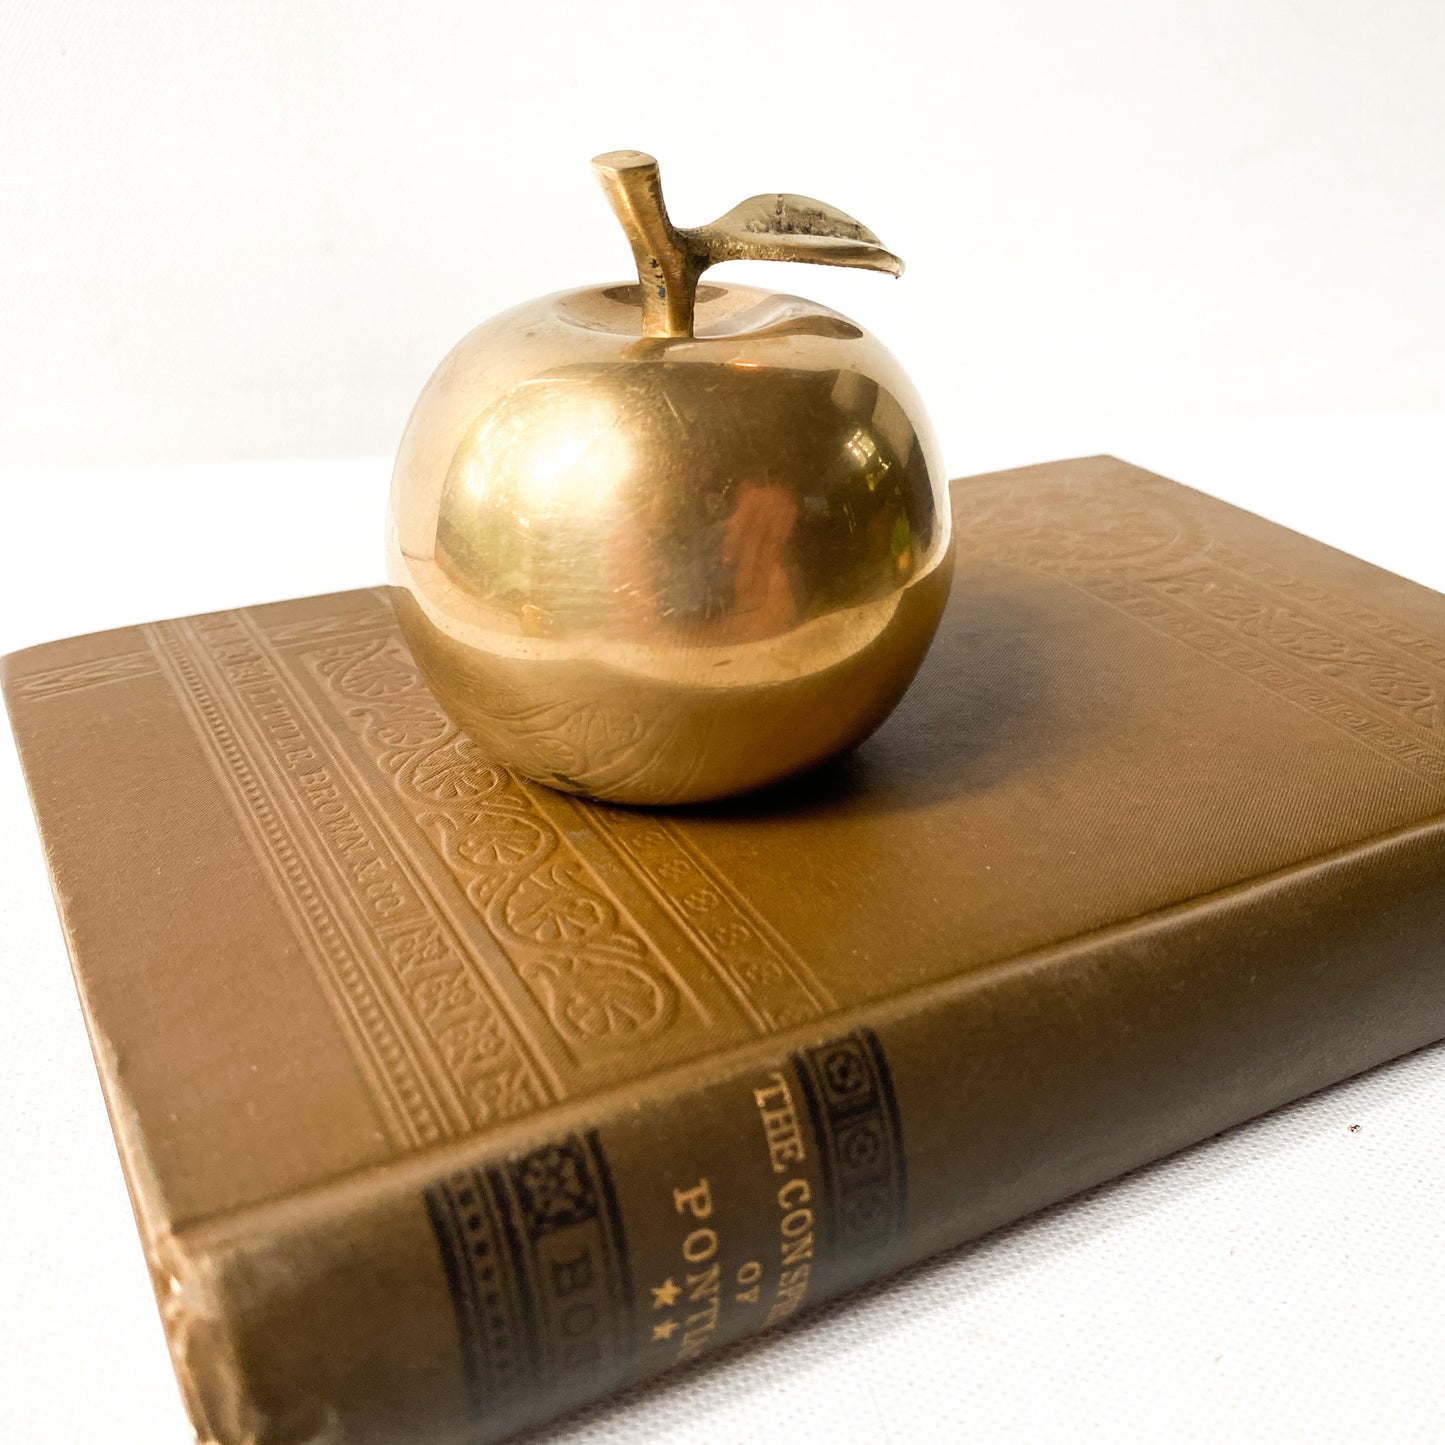 Vintage brass apple bell